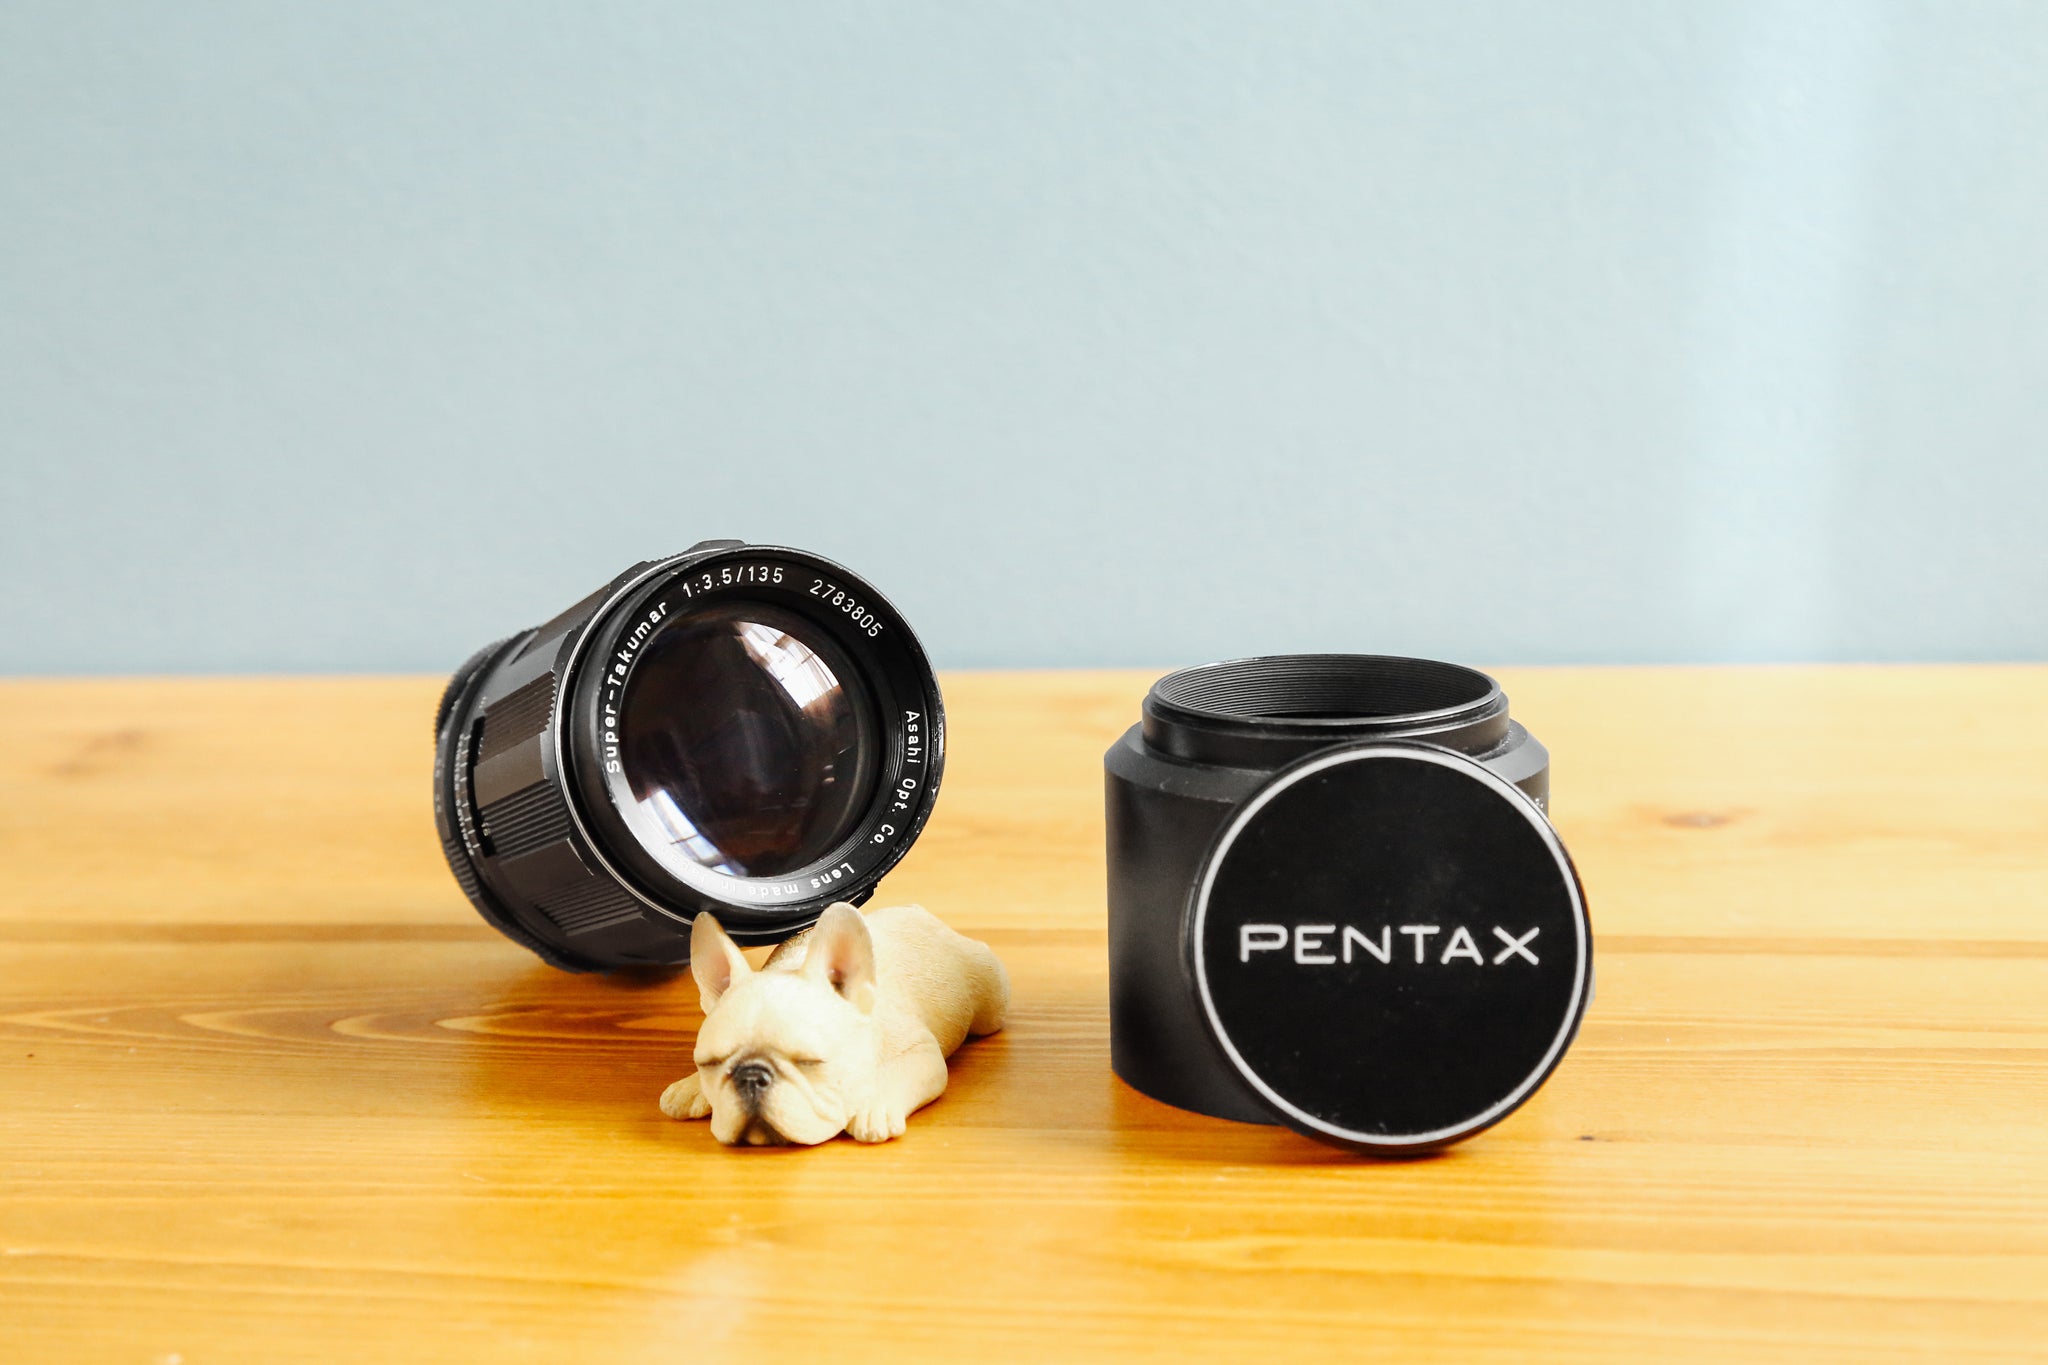 PENTAX SPF 明るい単焦点と望遠レンズセット！【動作品】 – Ein Camera